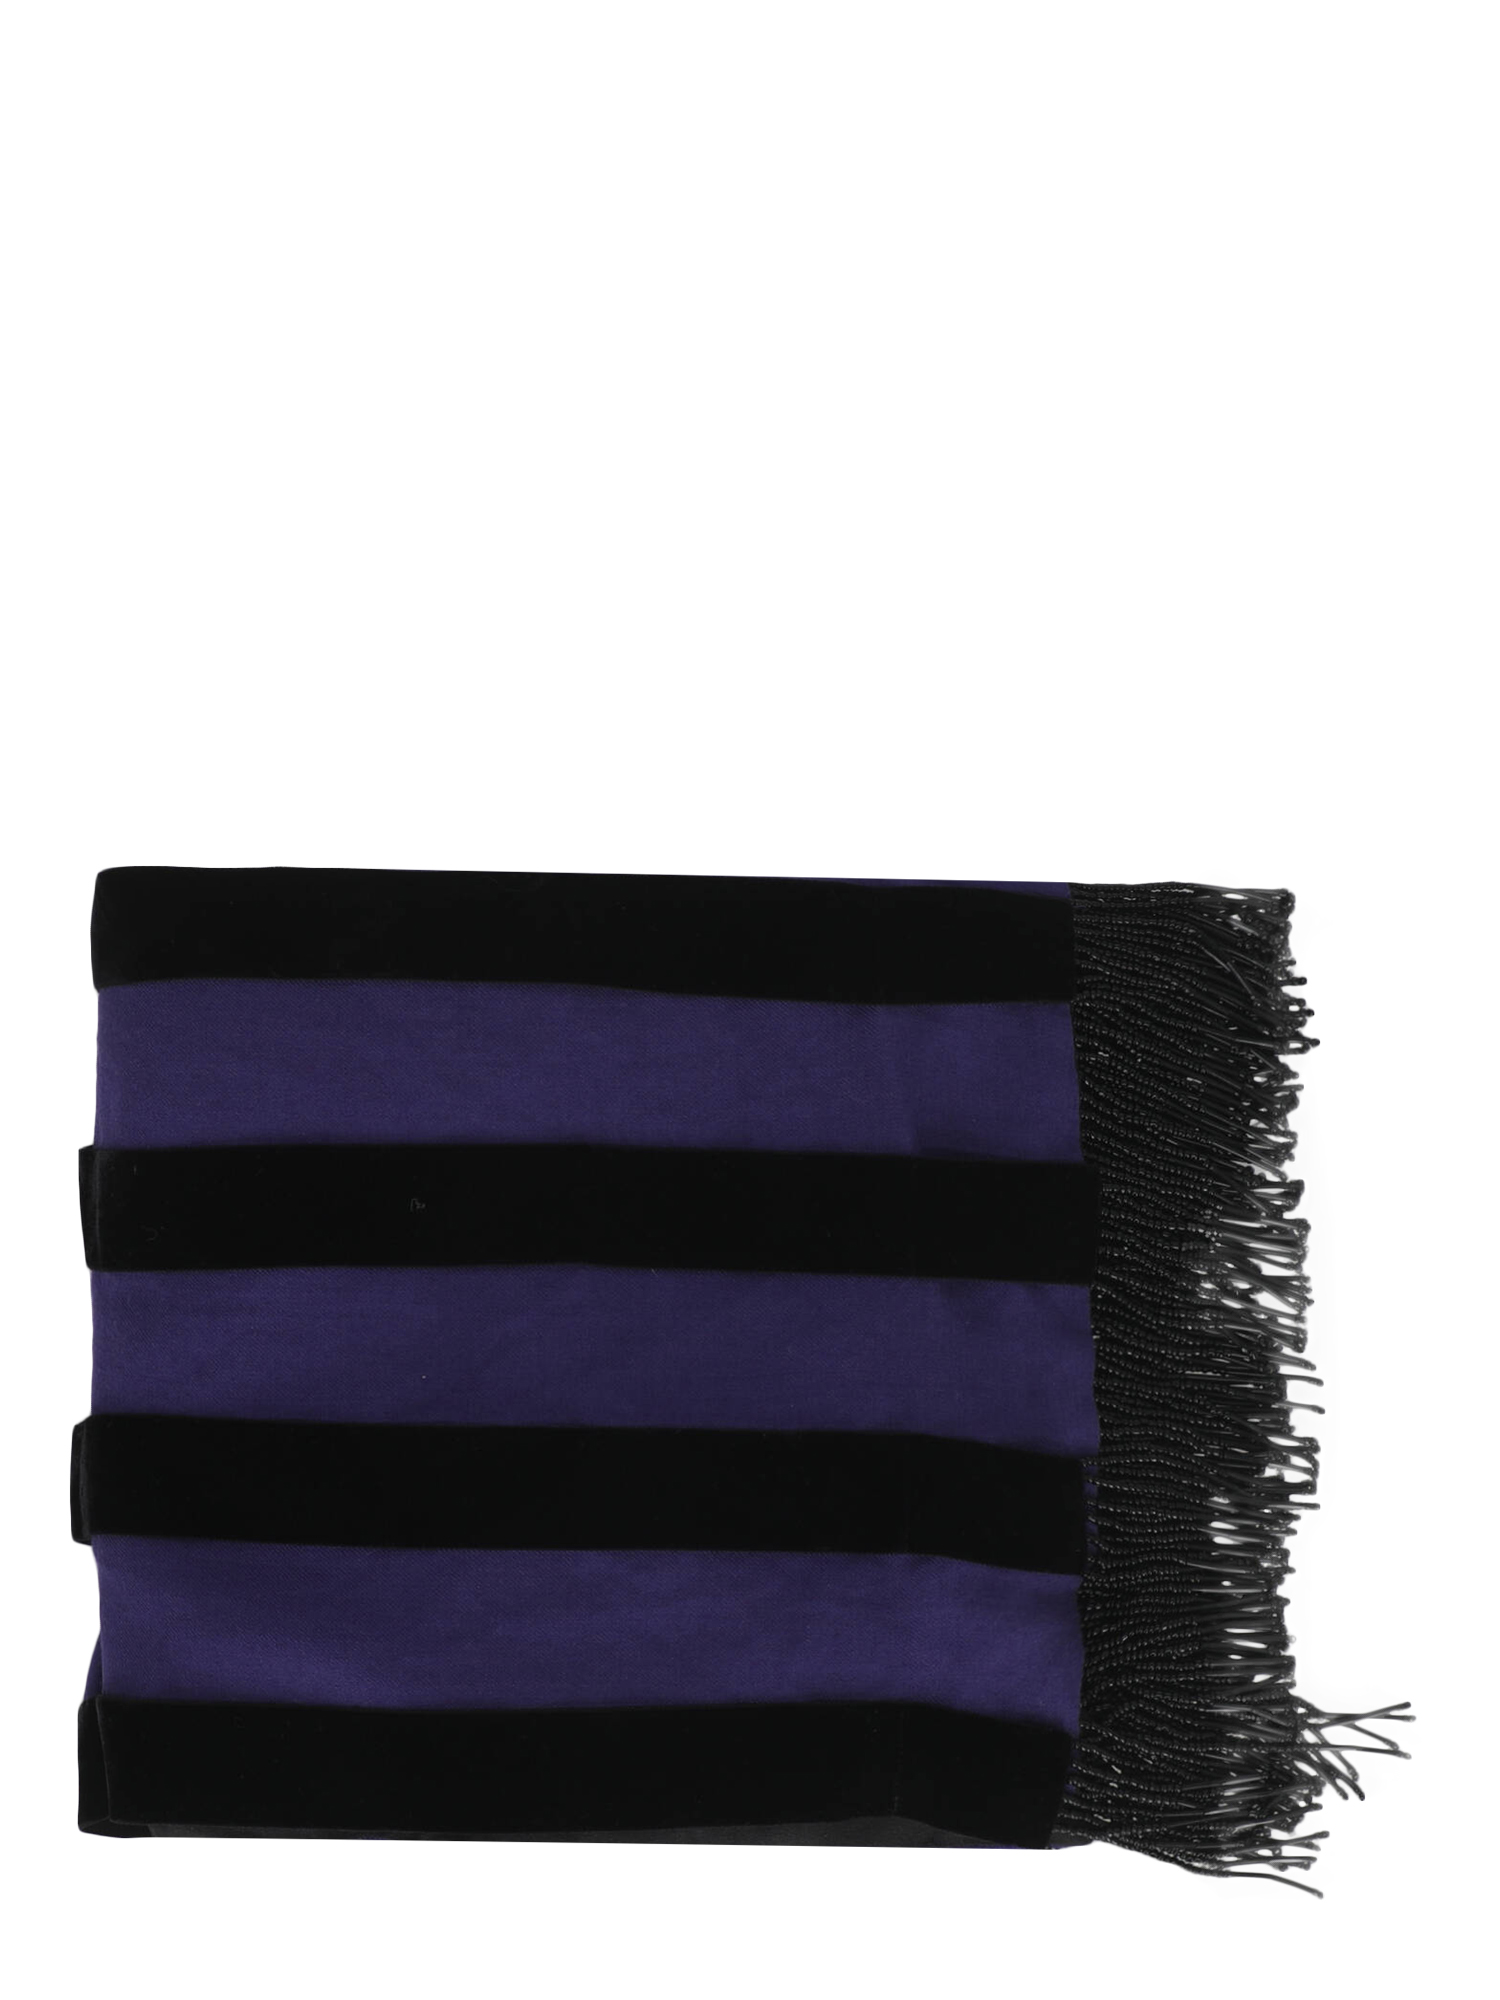 Condition: Very Good, Solid Color Fabric, Color: Black, Purple -  -  -